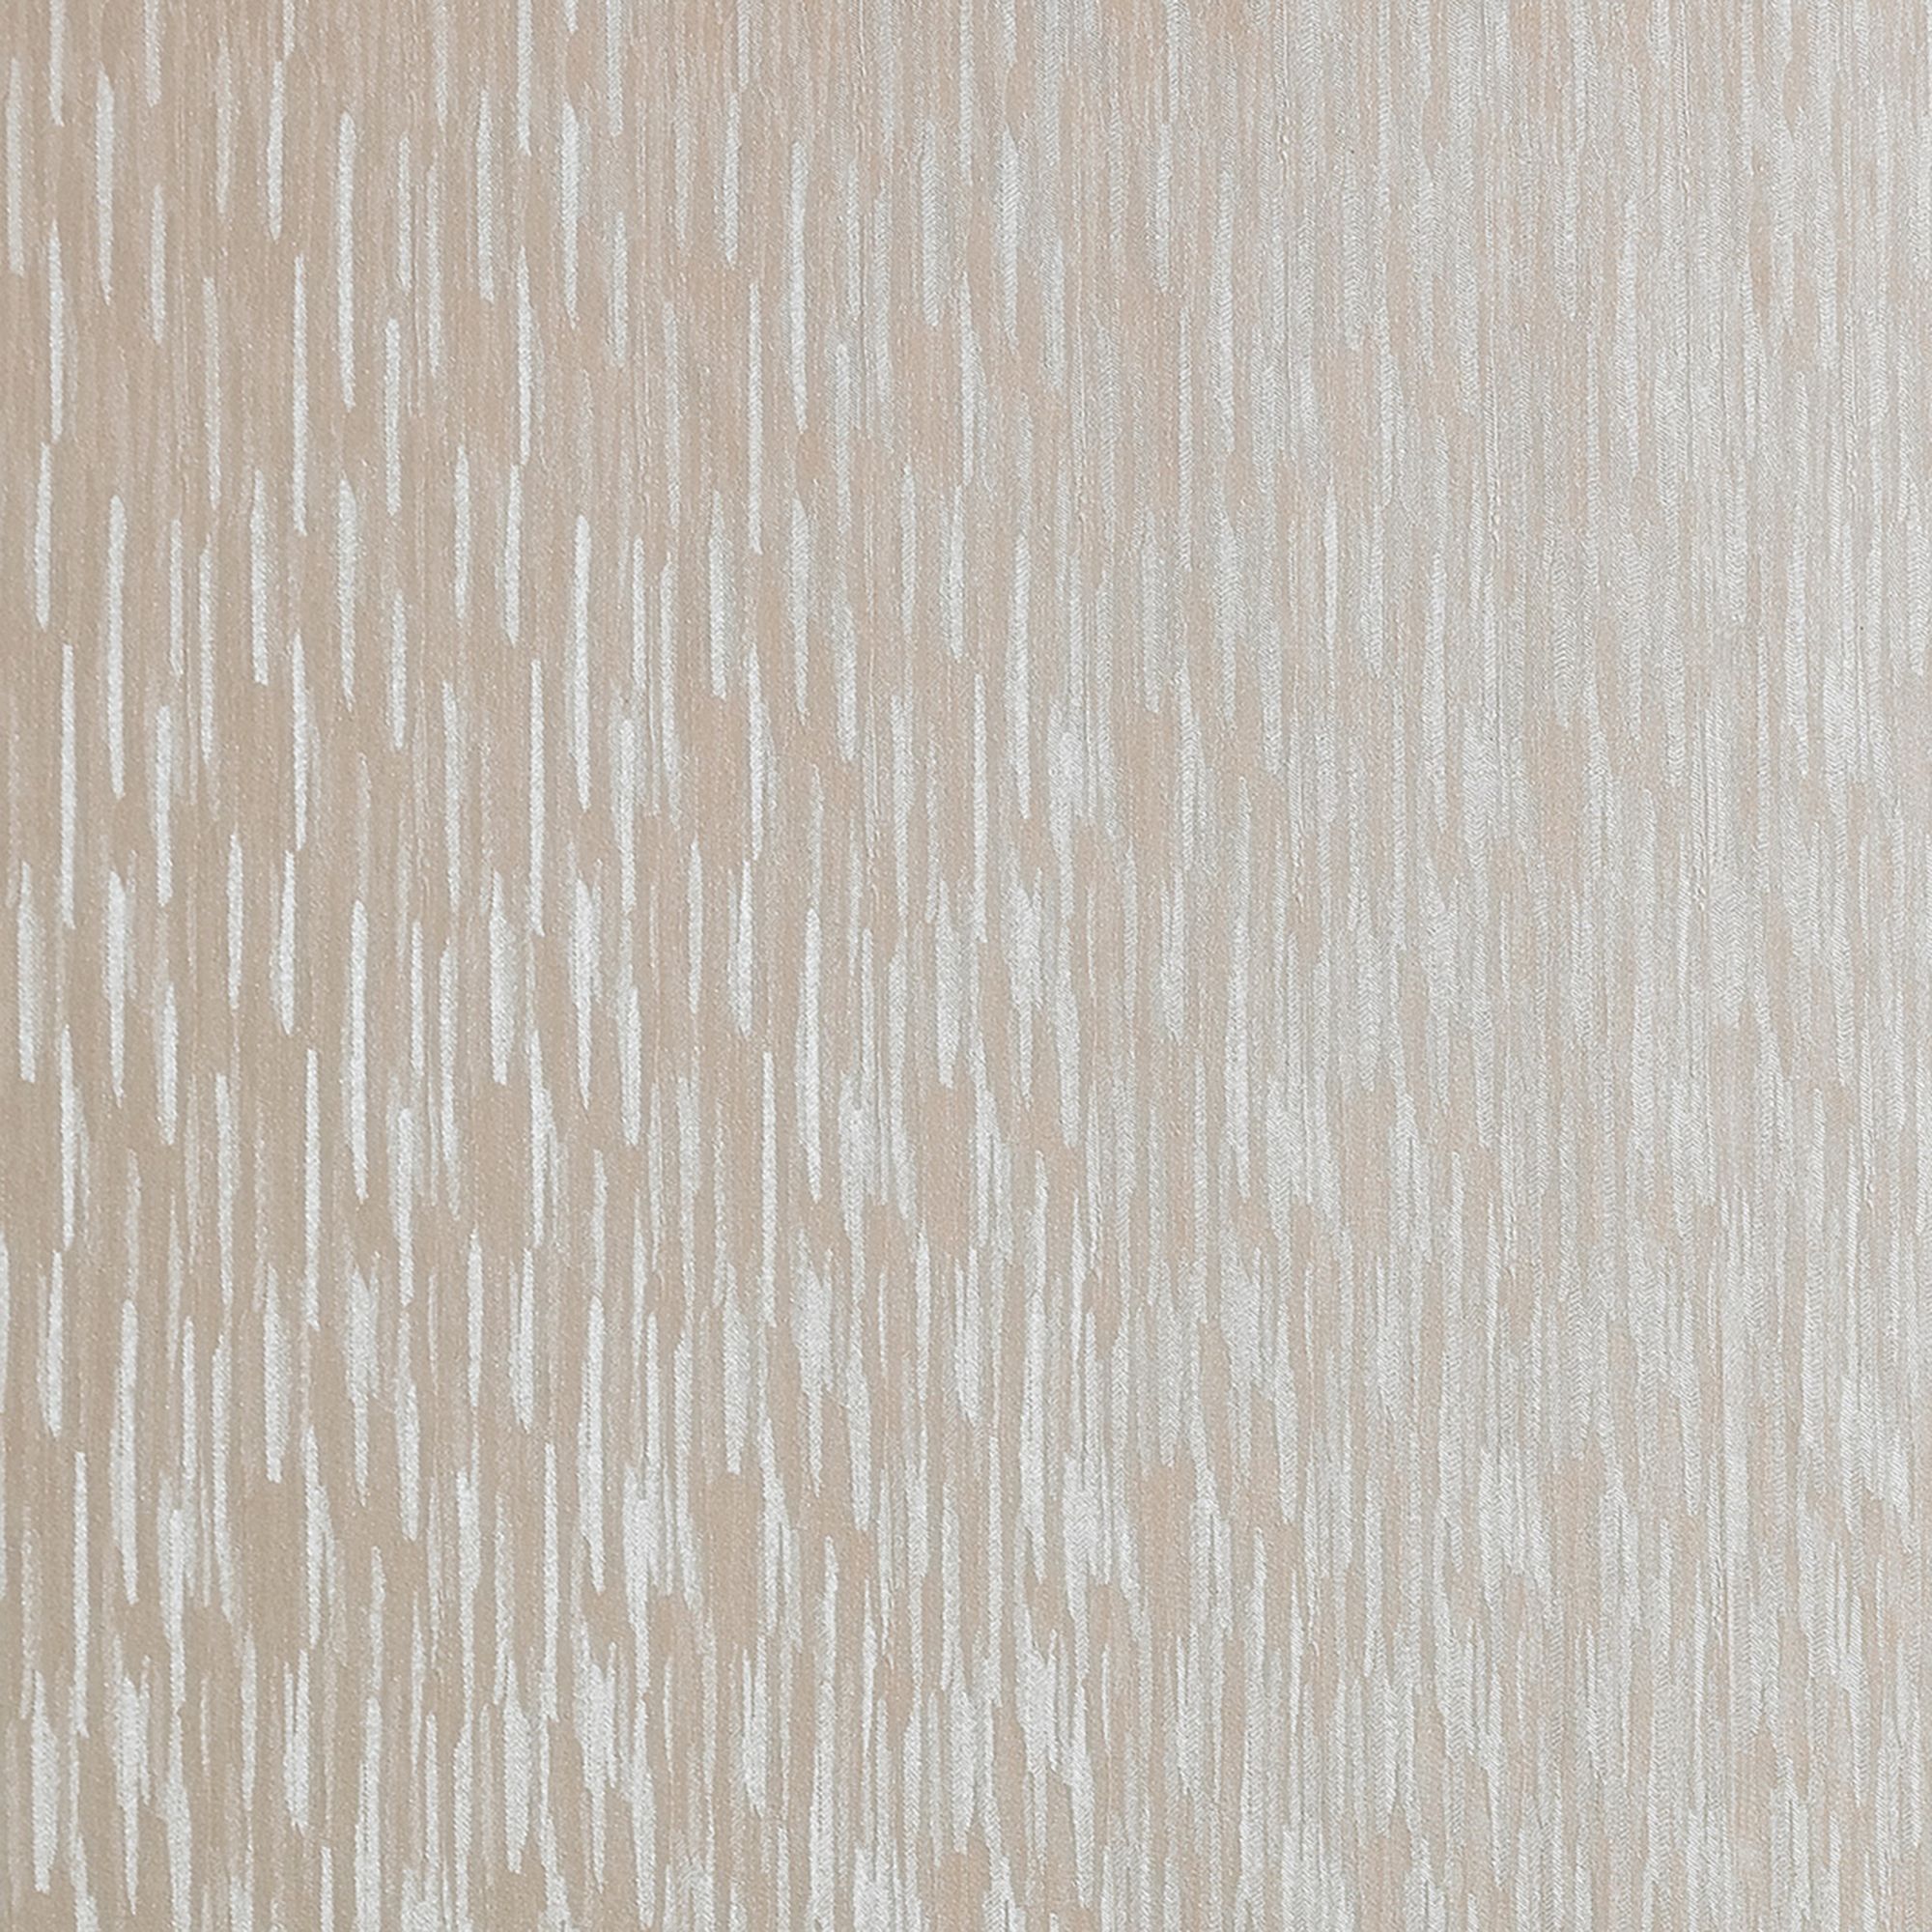 Boughton Cream Textured Wallpaper